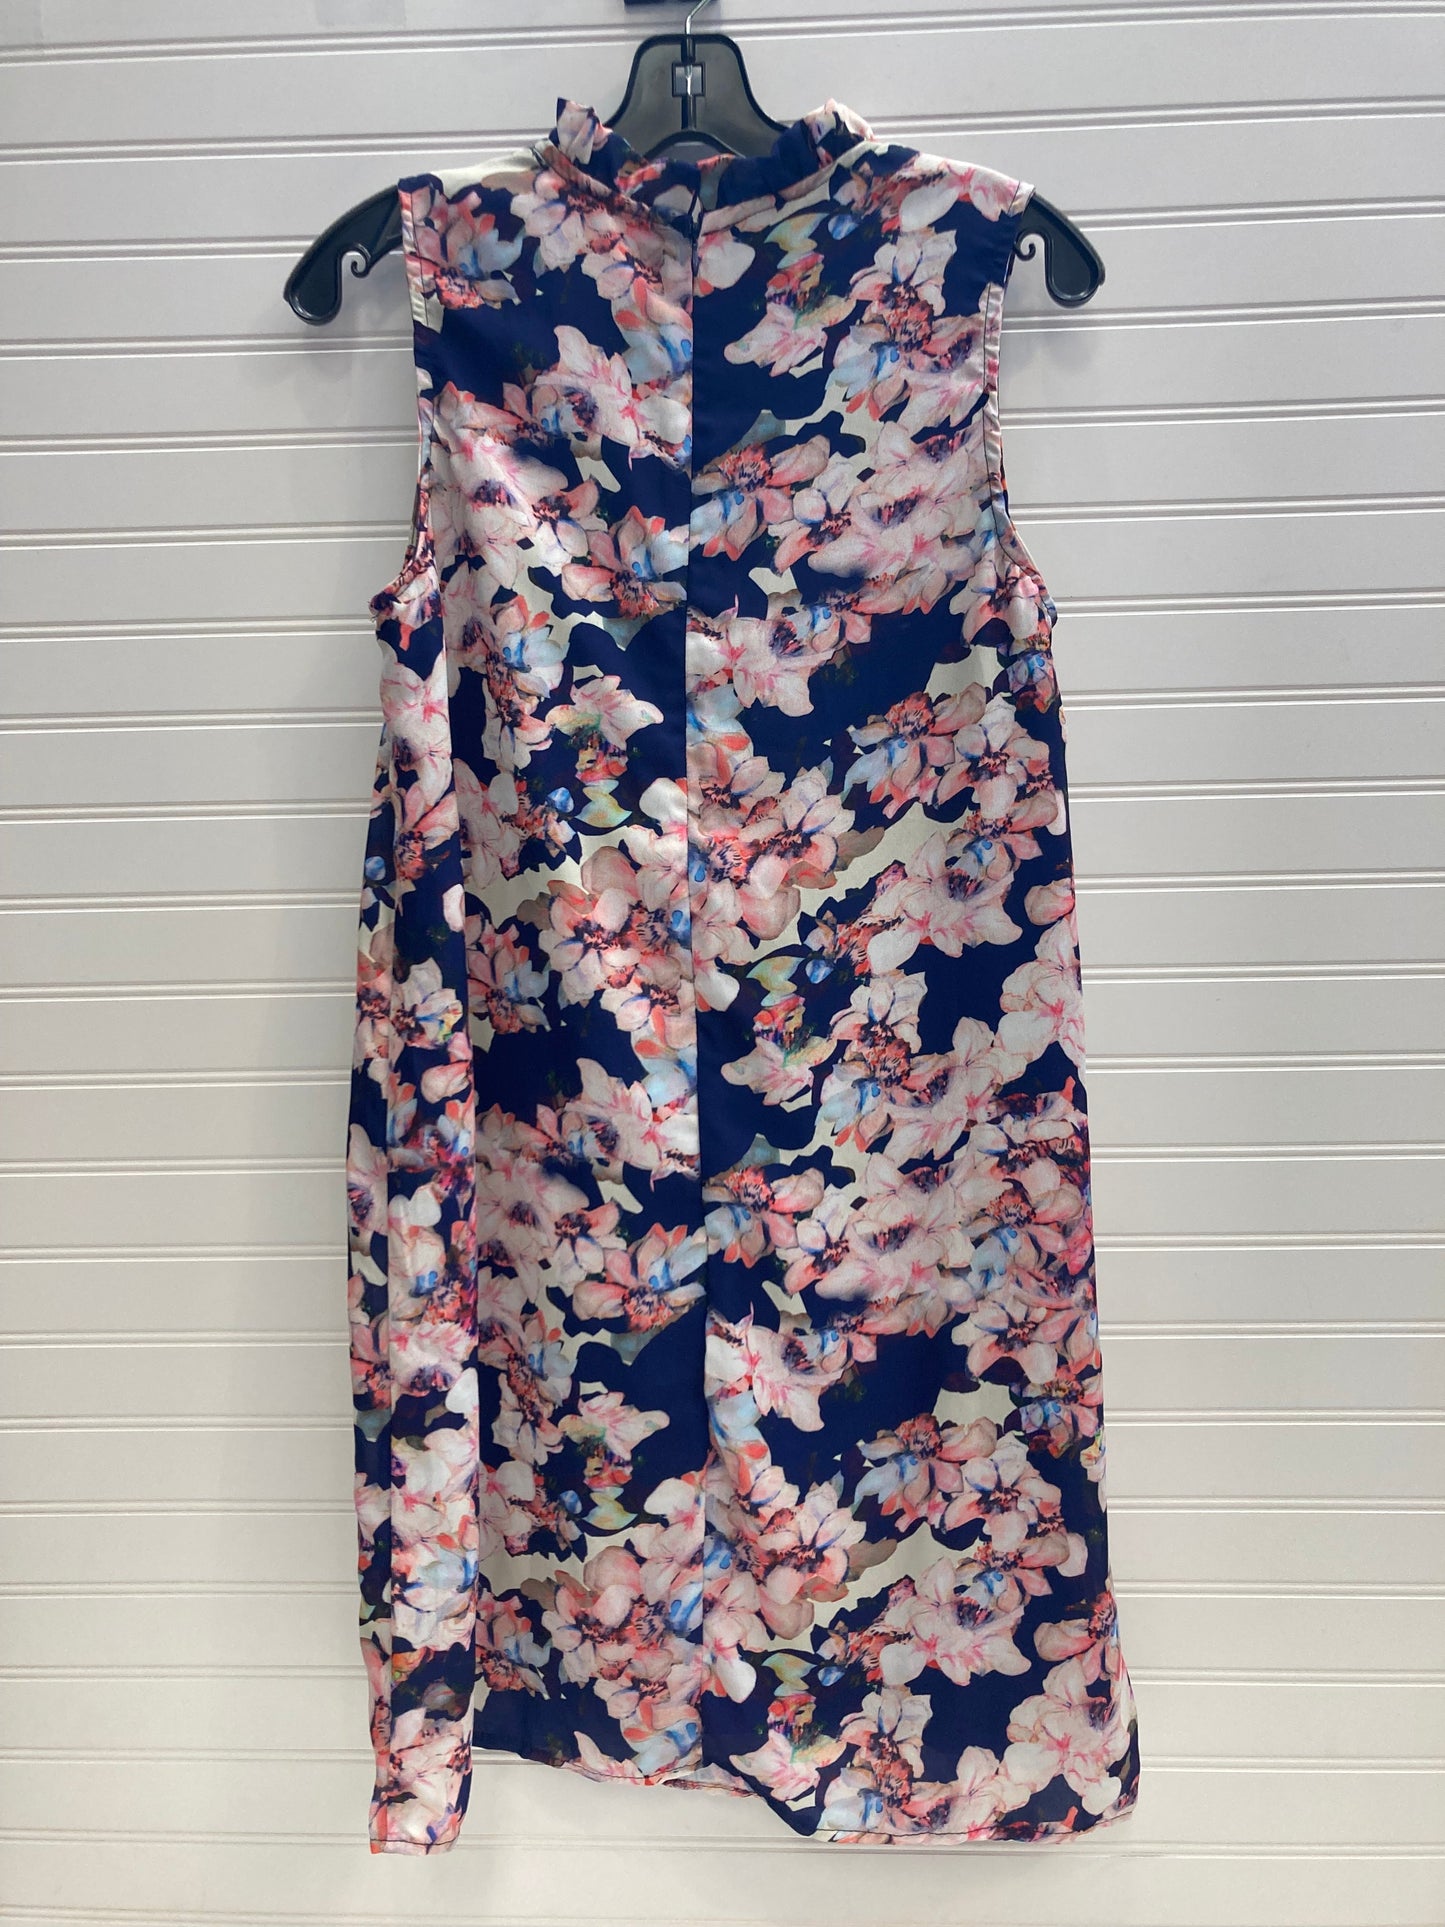 Blue & Pink Dress Casual Short Cynthia Rowley, Size 6